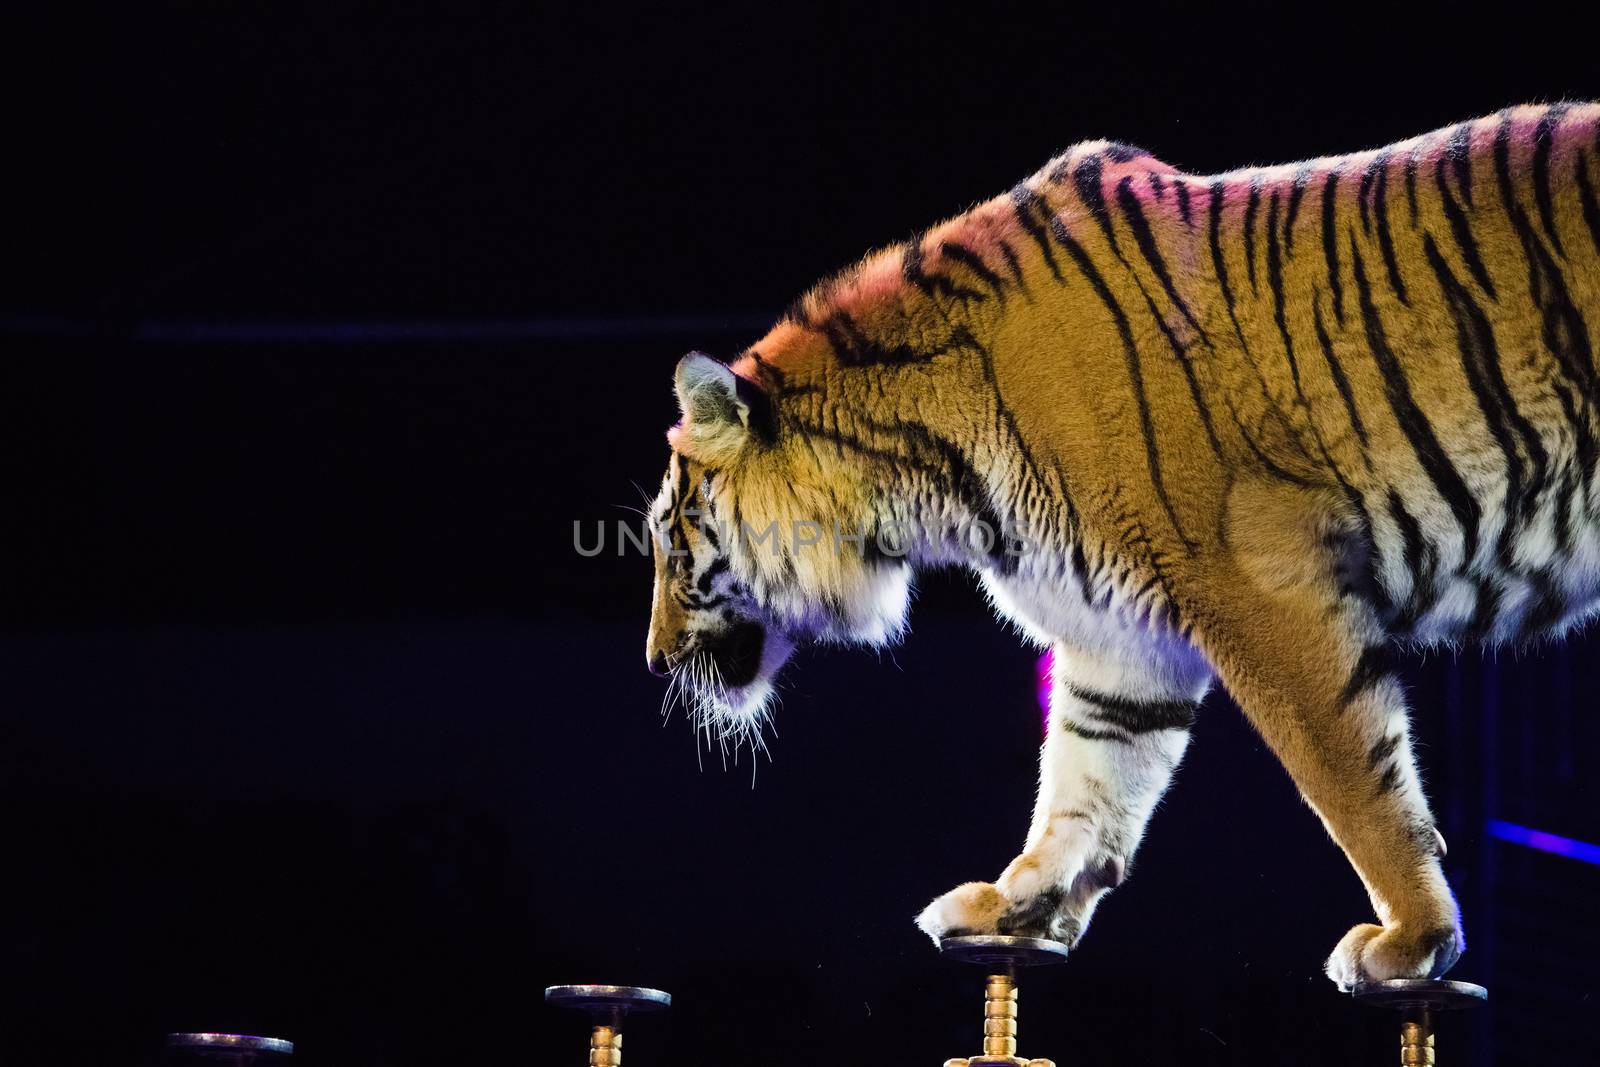 Circus. Tiger performs tricks in the circus arena